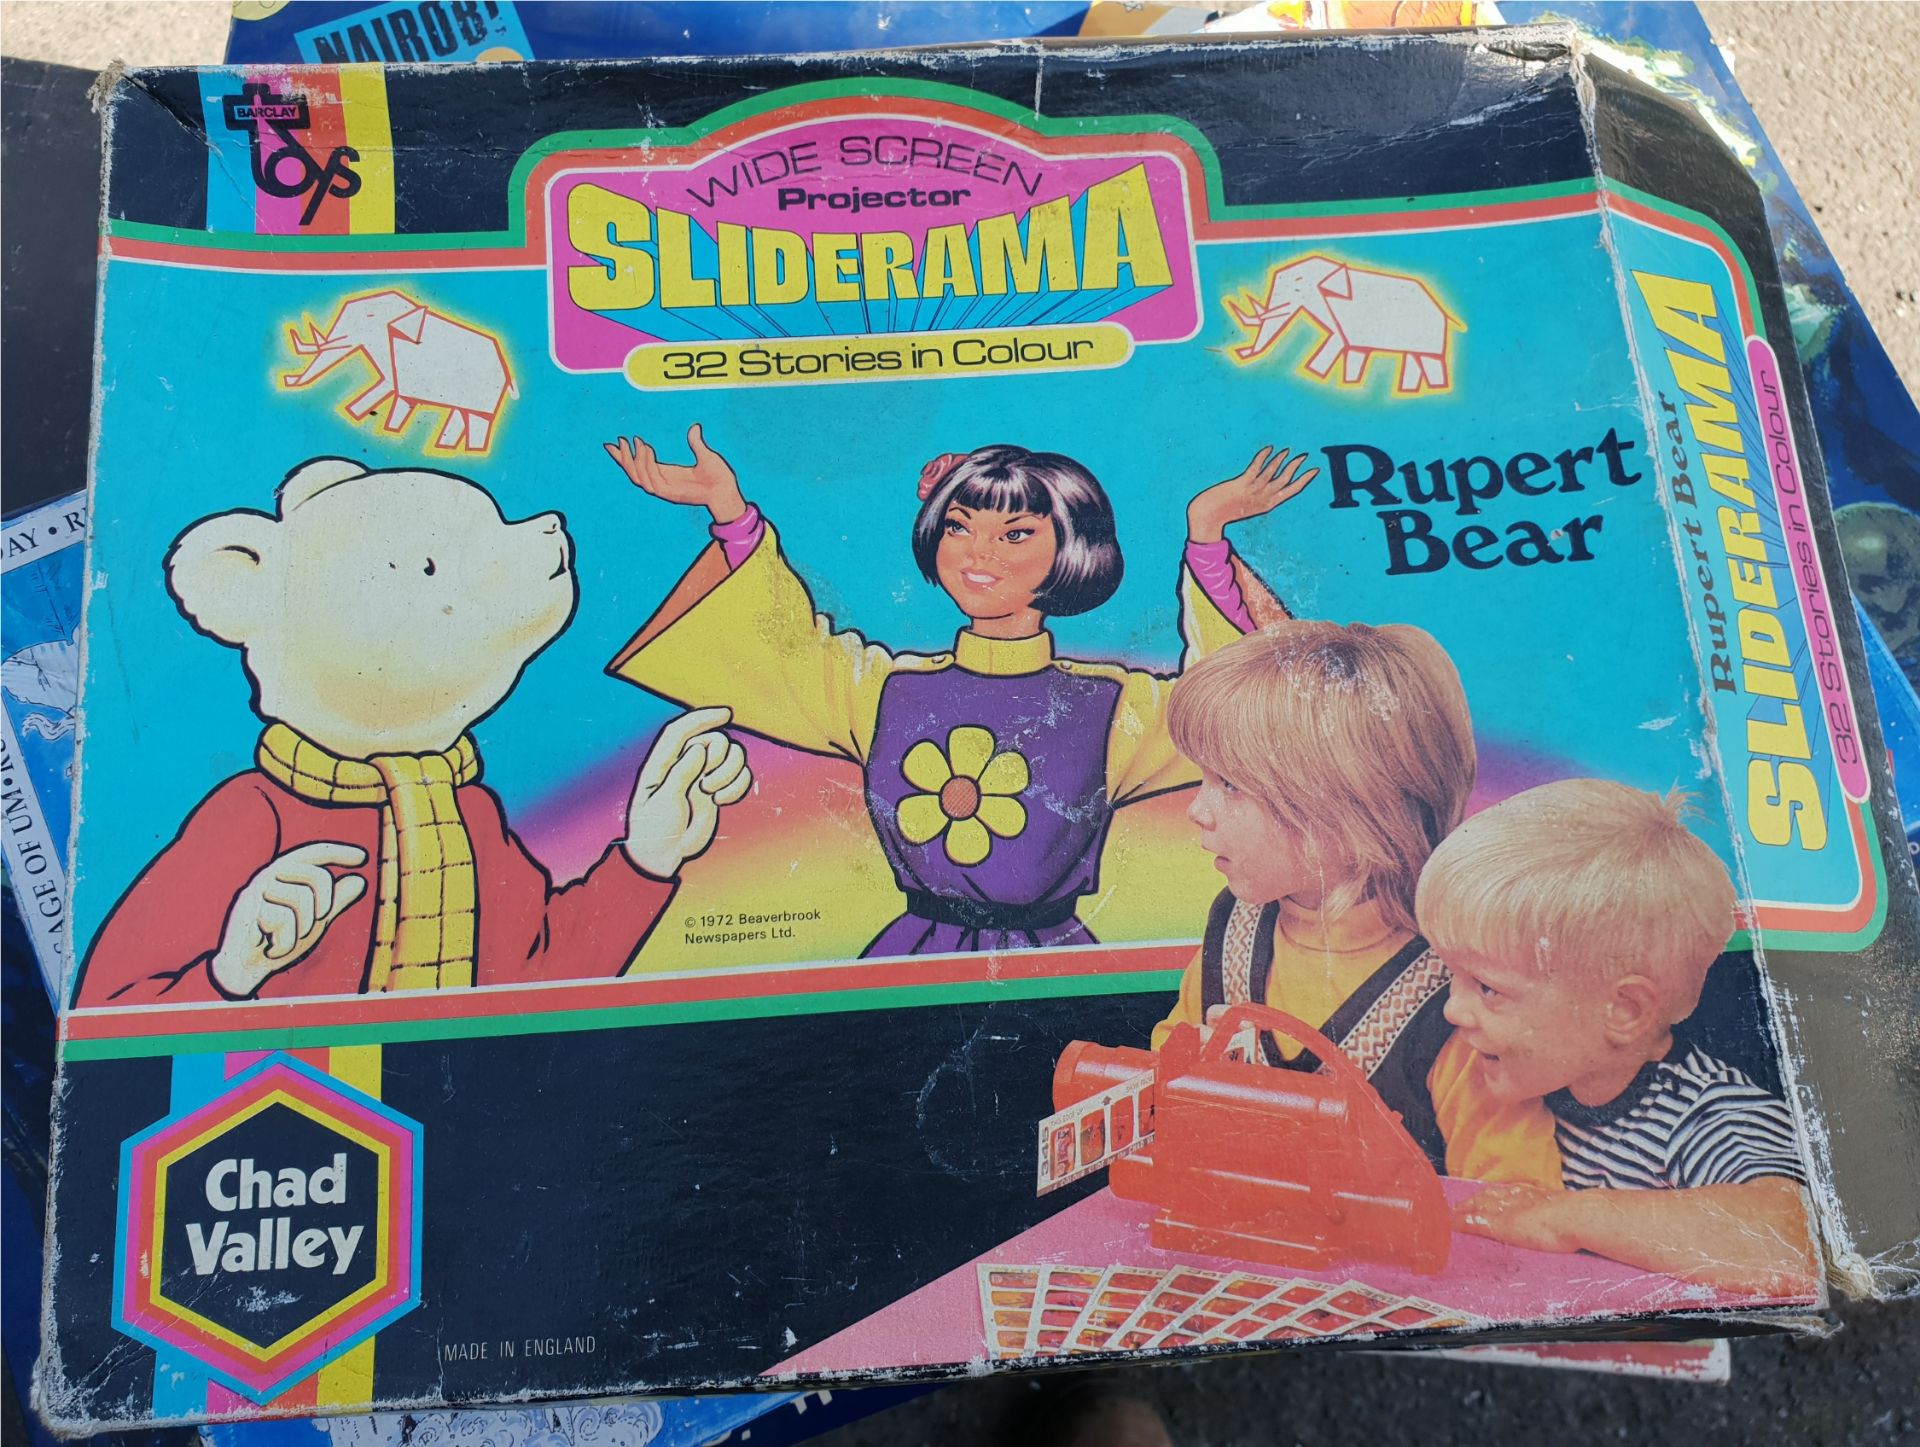 Vintage Rupert Bear Sliderama & Rupert Bear Board Game Plus 6 Other Assorted Board Games